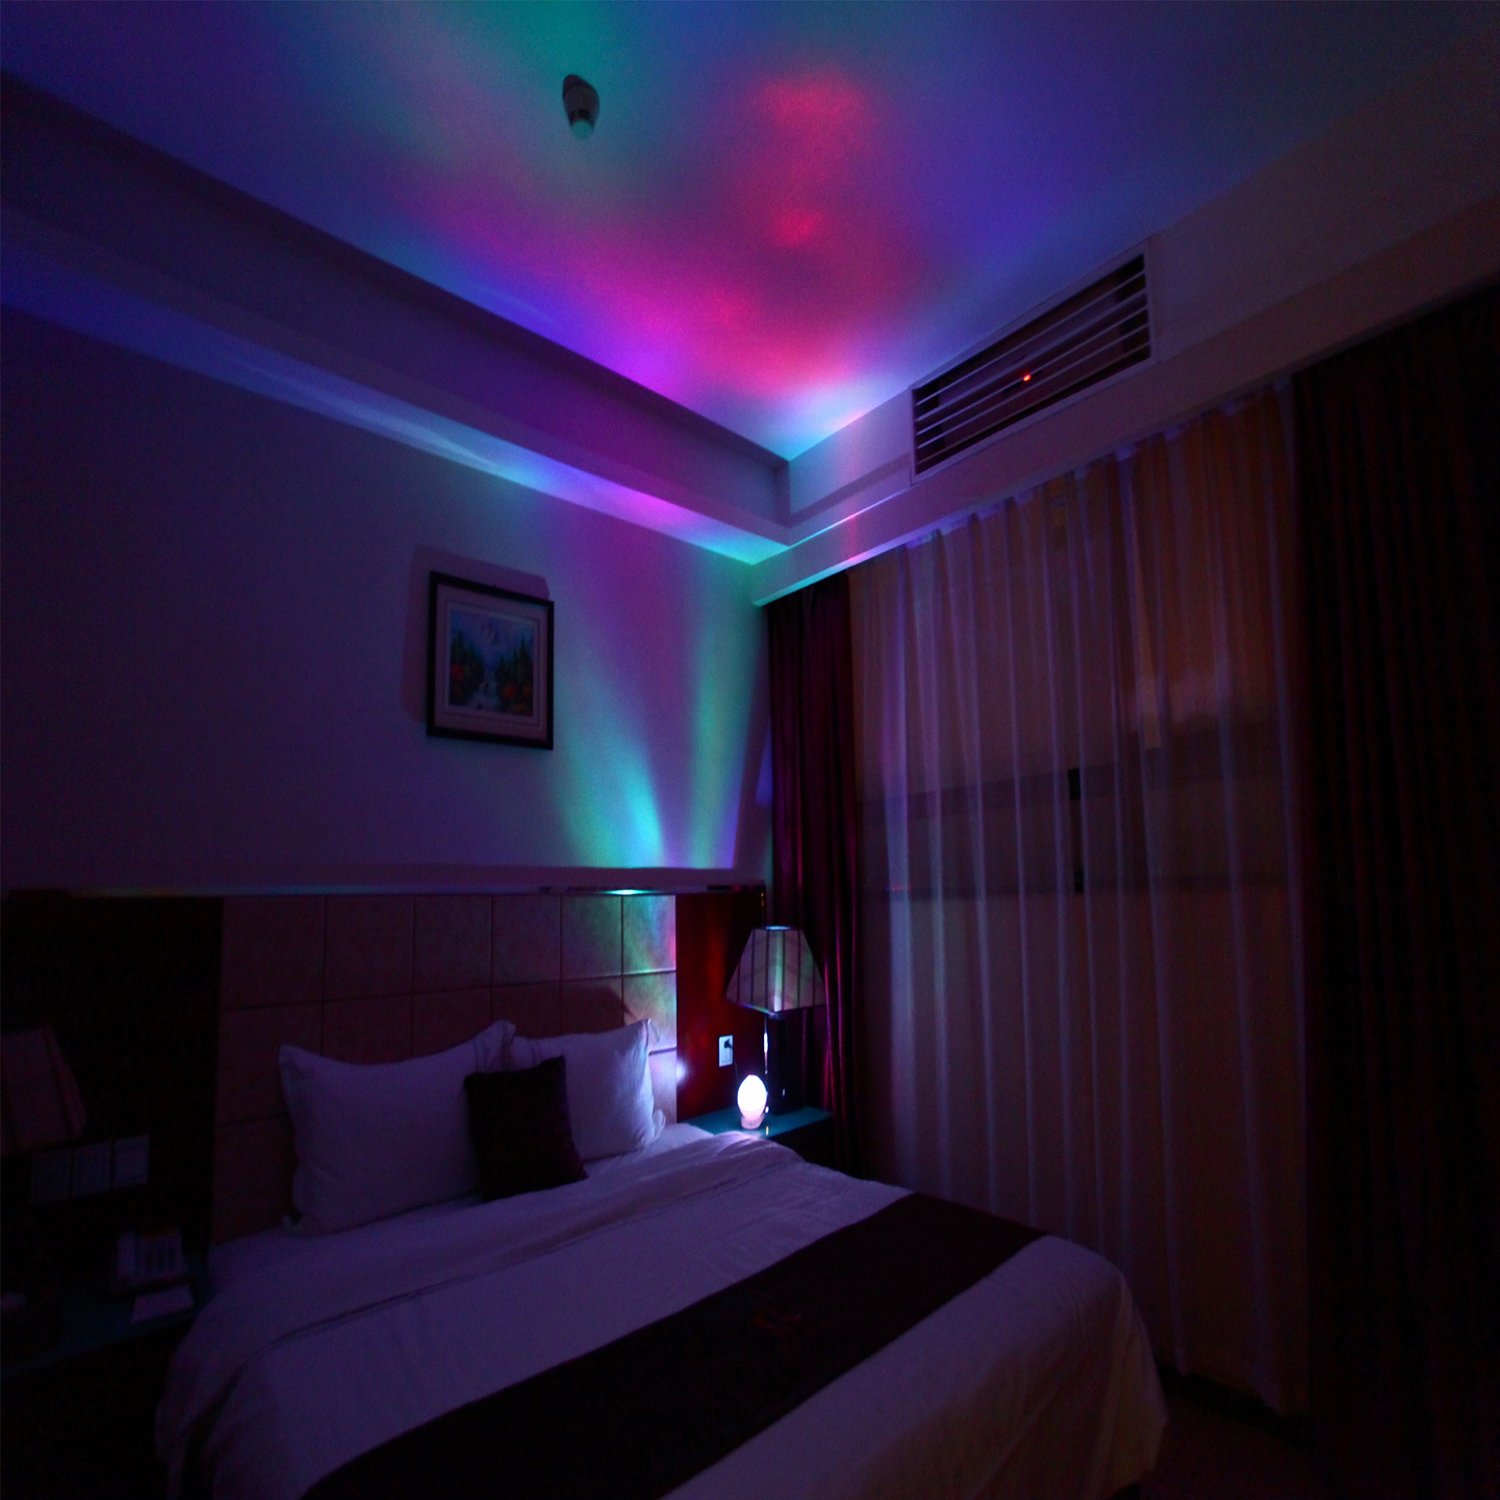 Diamond LED Night Light Realistic Aurora Borealis Projector Sleep Aid Xmas Gift 